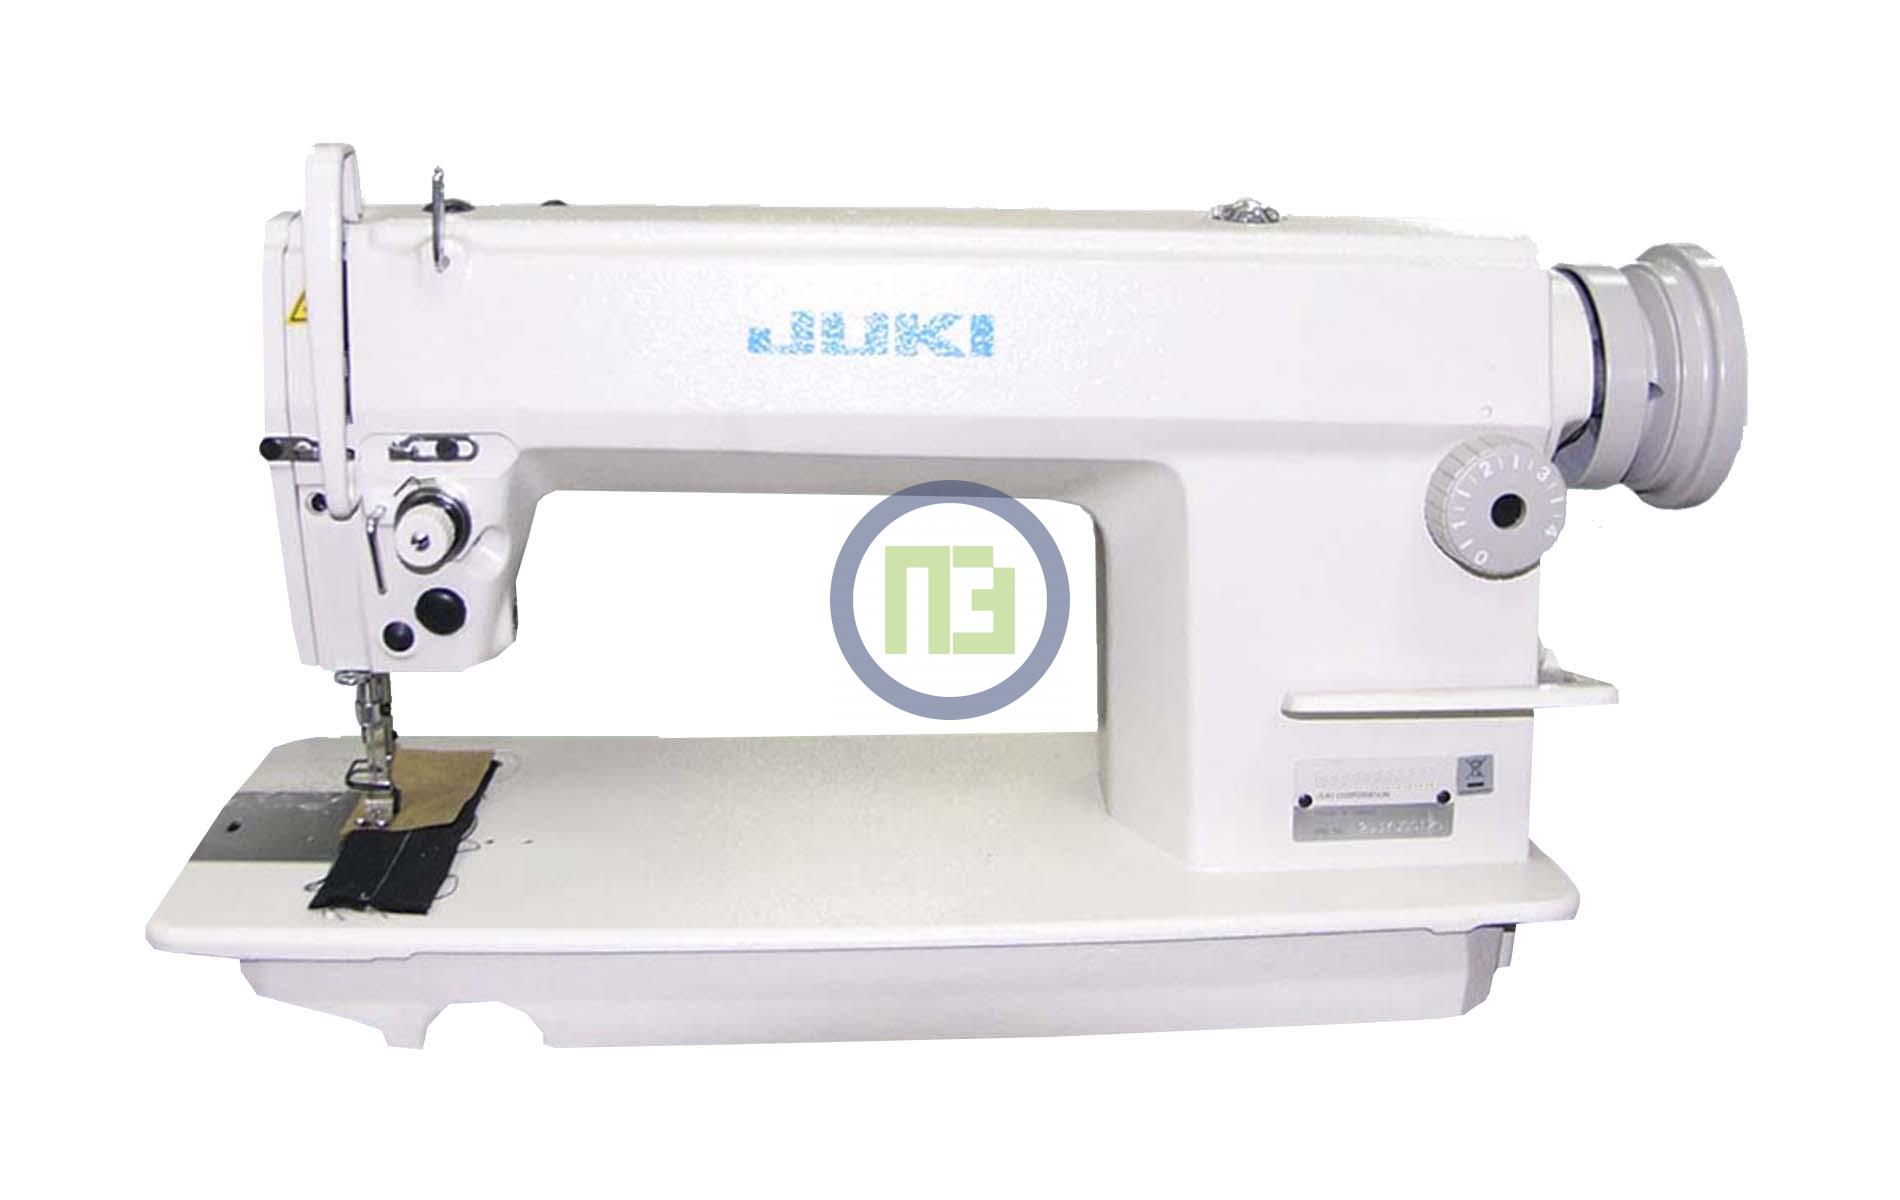 Промышленная швейная машина Juki  DLN-5410N